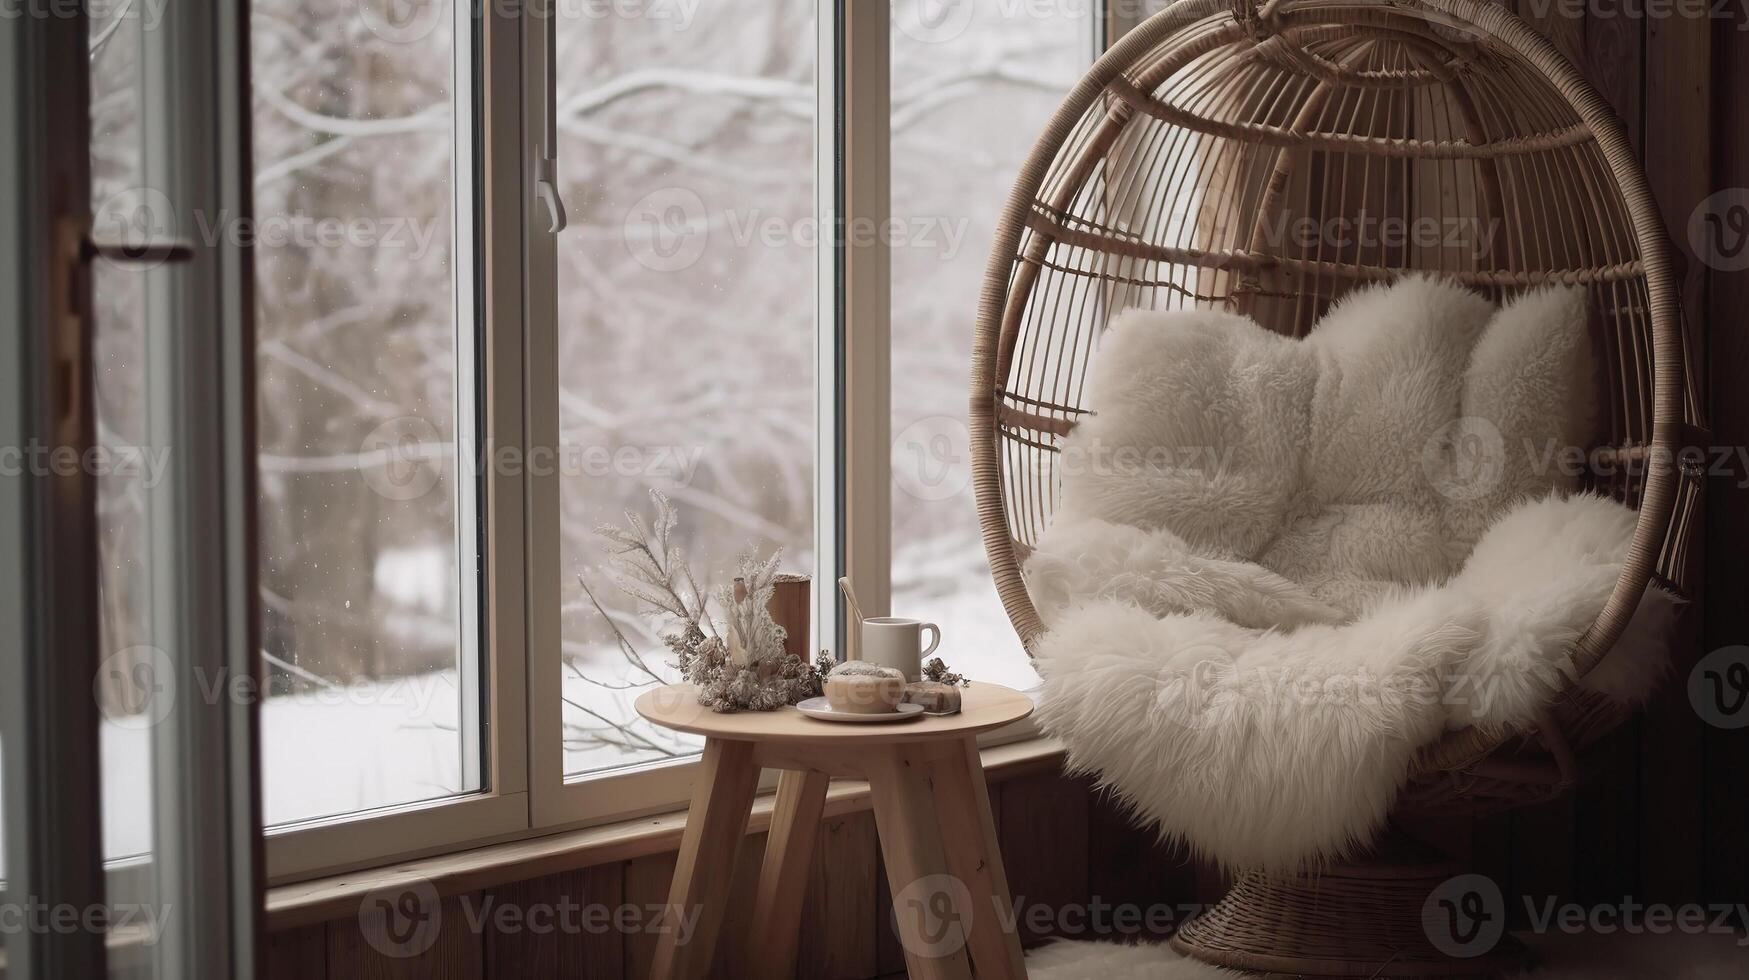 knus leven kamer, winter interieur foto